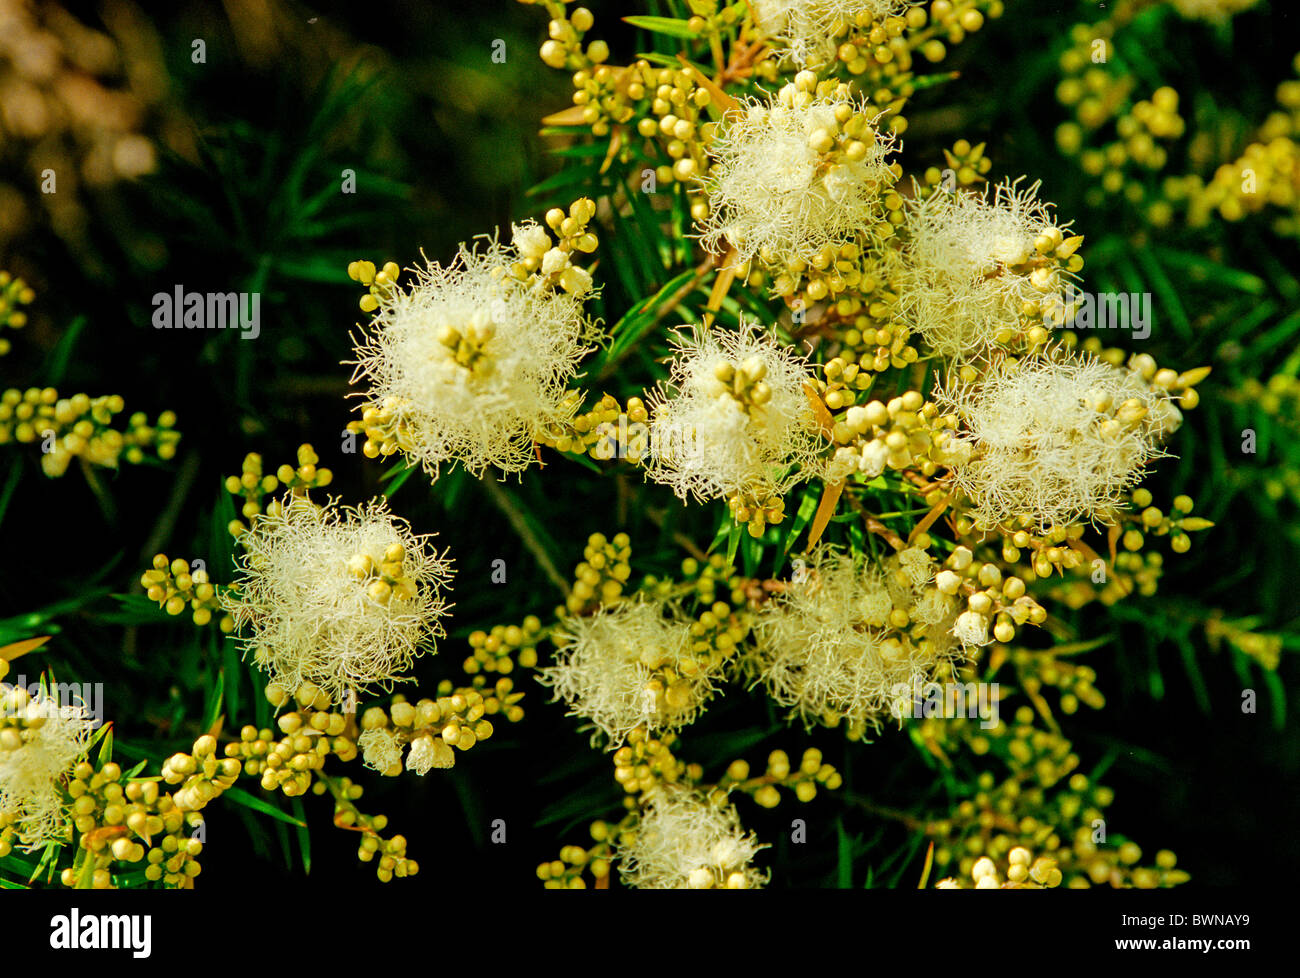 Melaleuca Quinquenervia leichte Cajeput Baum Mirtaceae Aystralia Pflanze  Pflanzen blühen Blumen Blüte Stockfotografie - Alamy